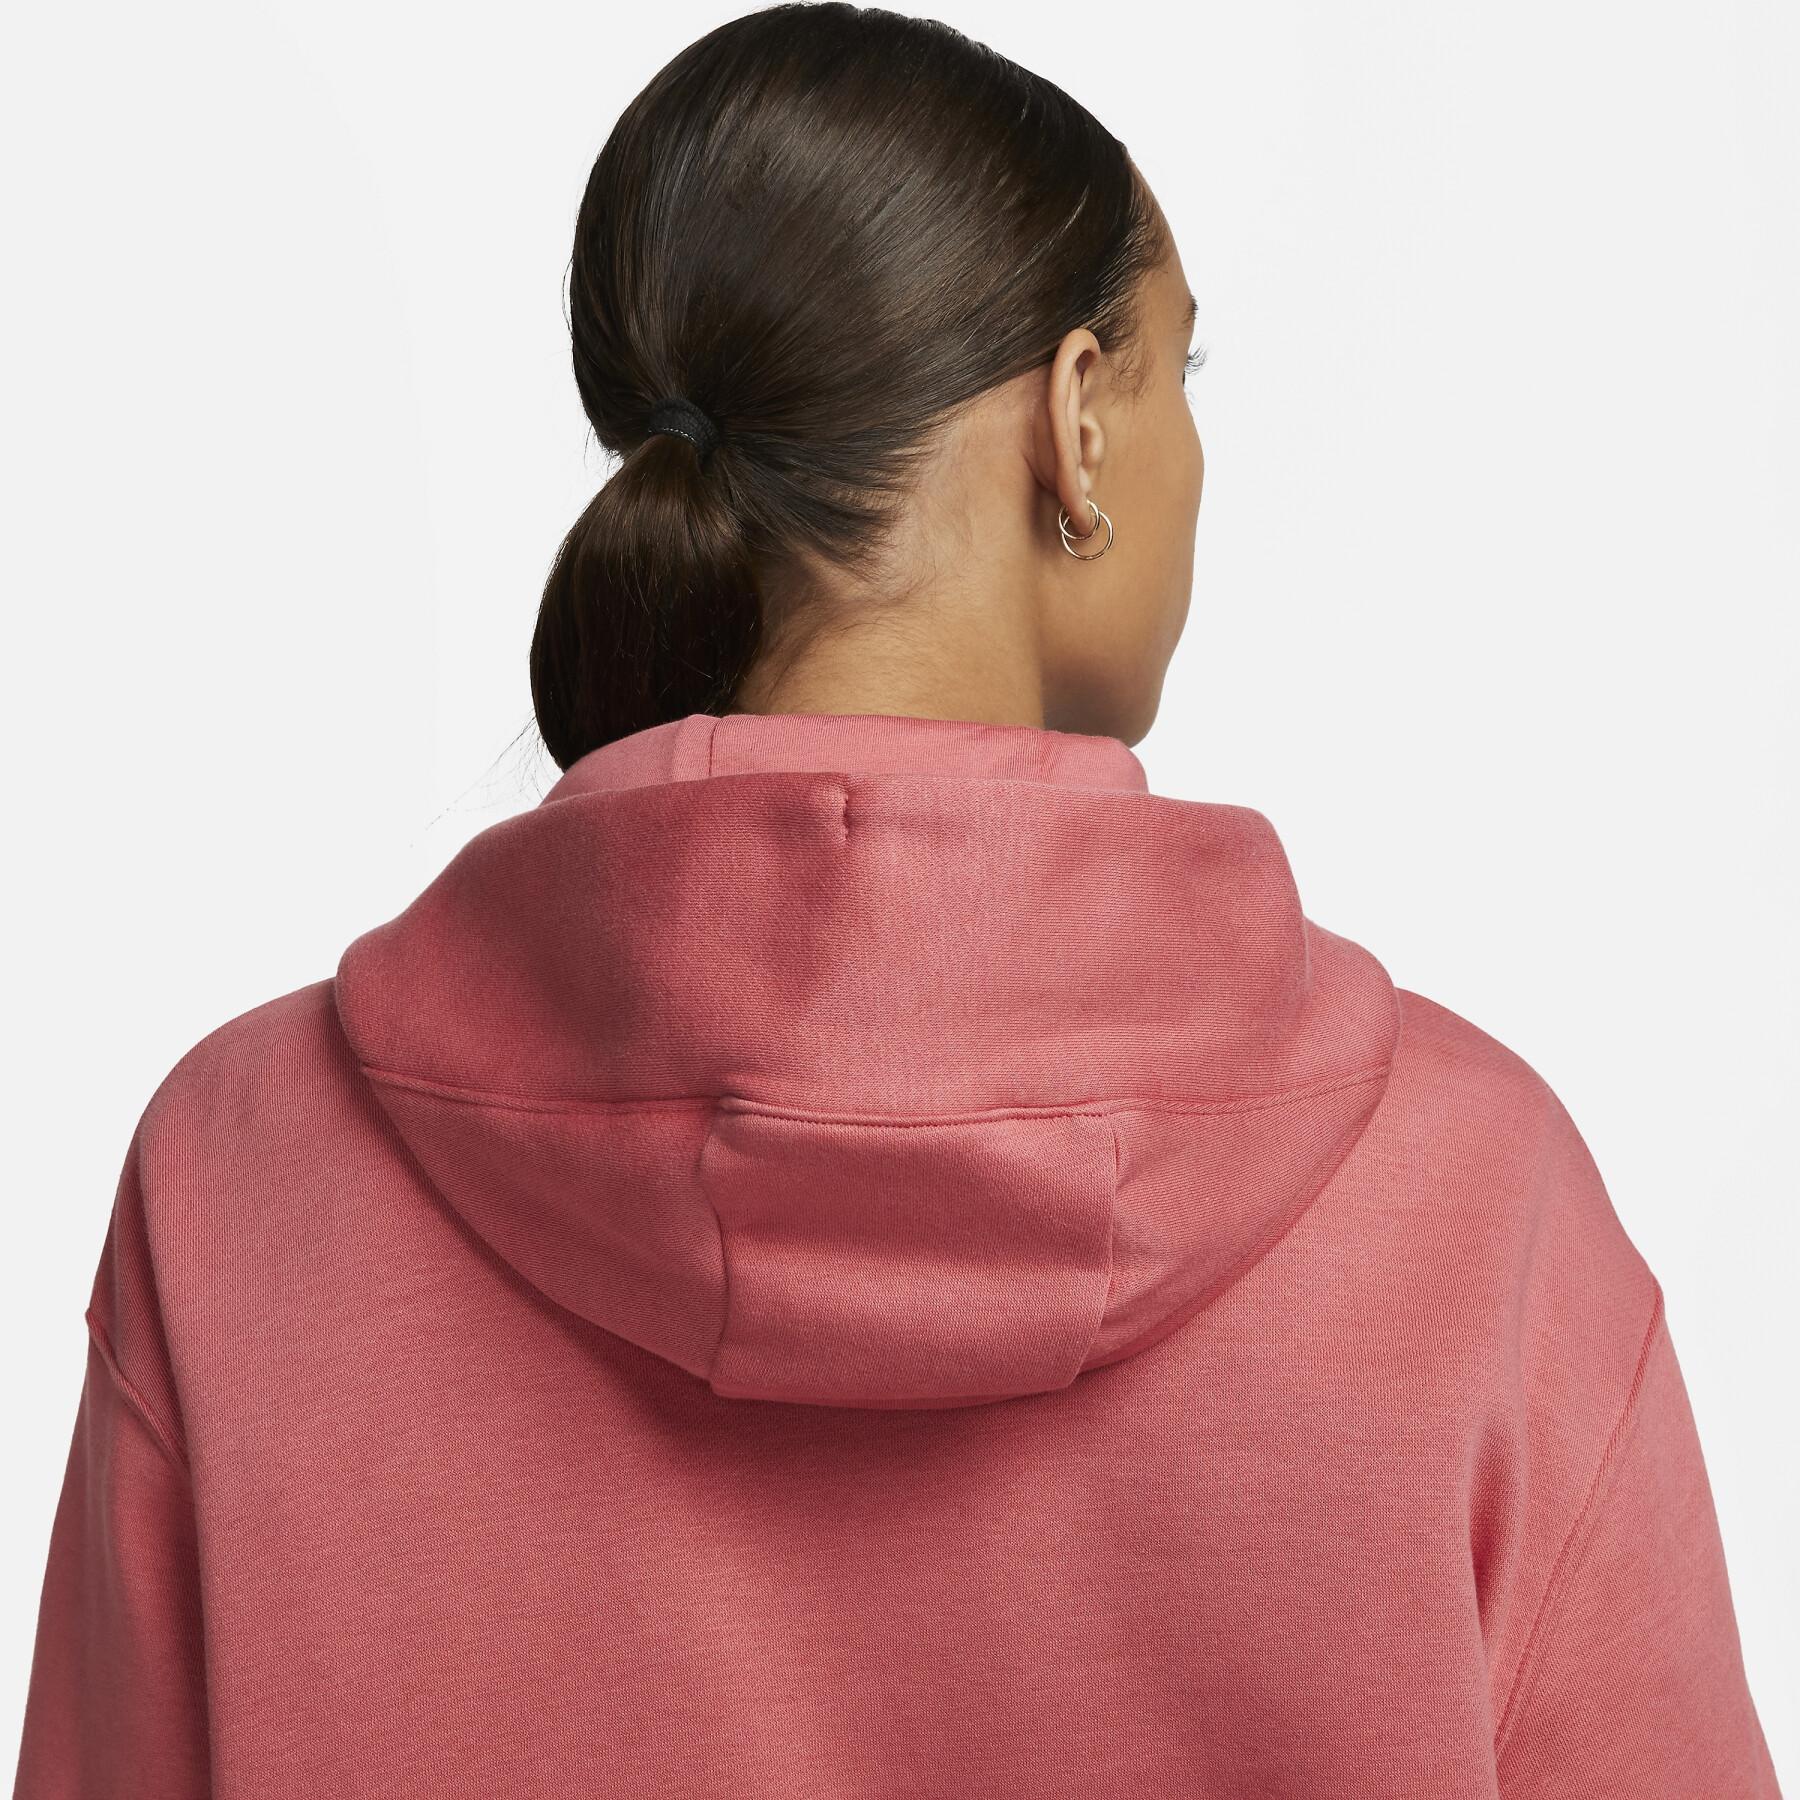 Sweatshirt för kvinnor Nike Fleece OS PO HDY MS